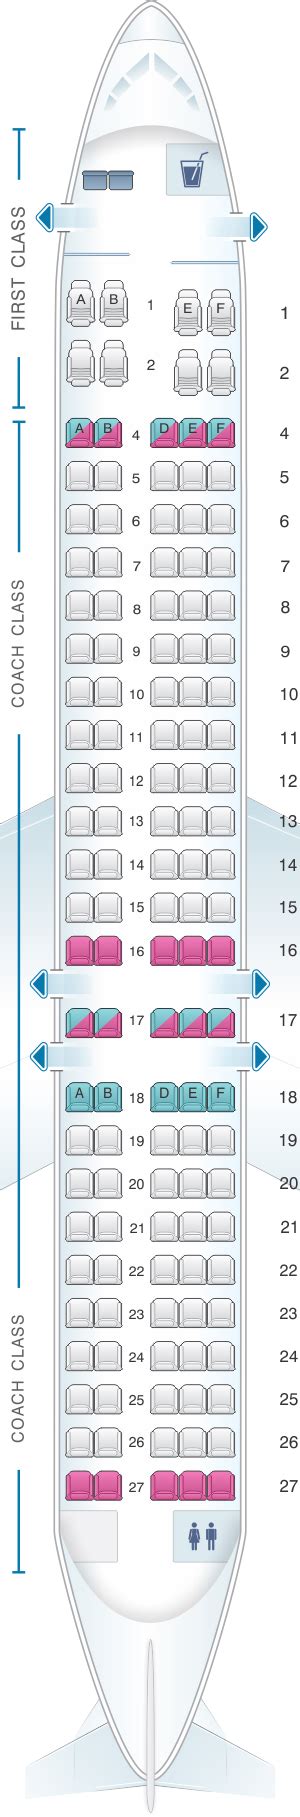 Hawaiian Airline Seating Chart